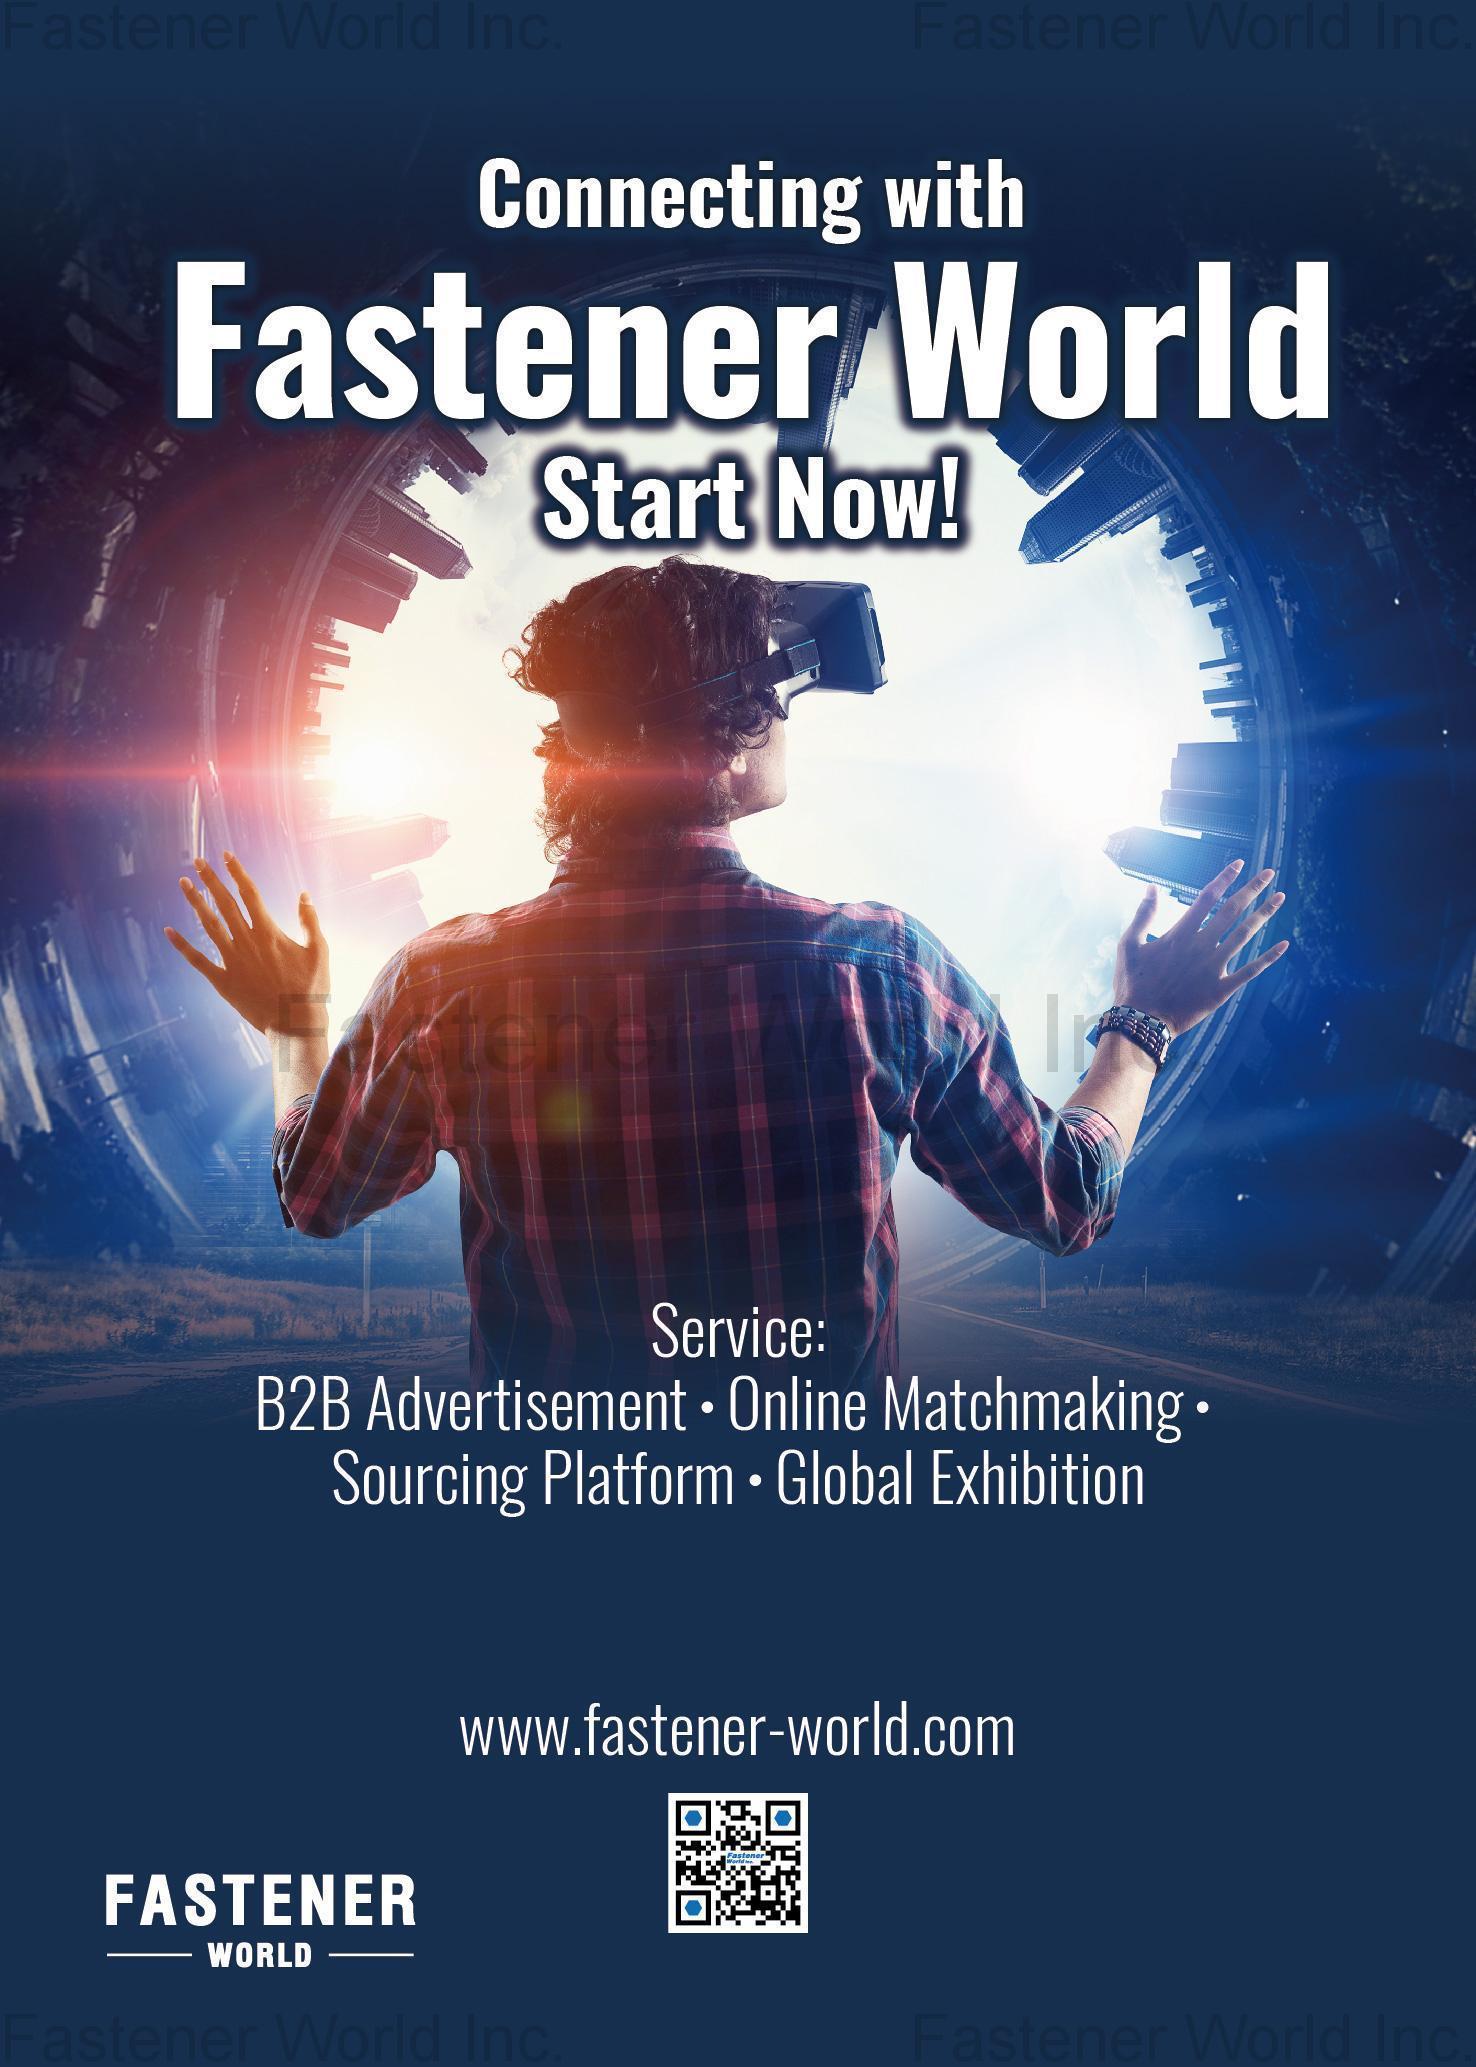  B2B Advertisement, Online Matchmaking, Sourcing Platform, Global Exhibition